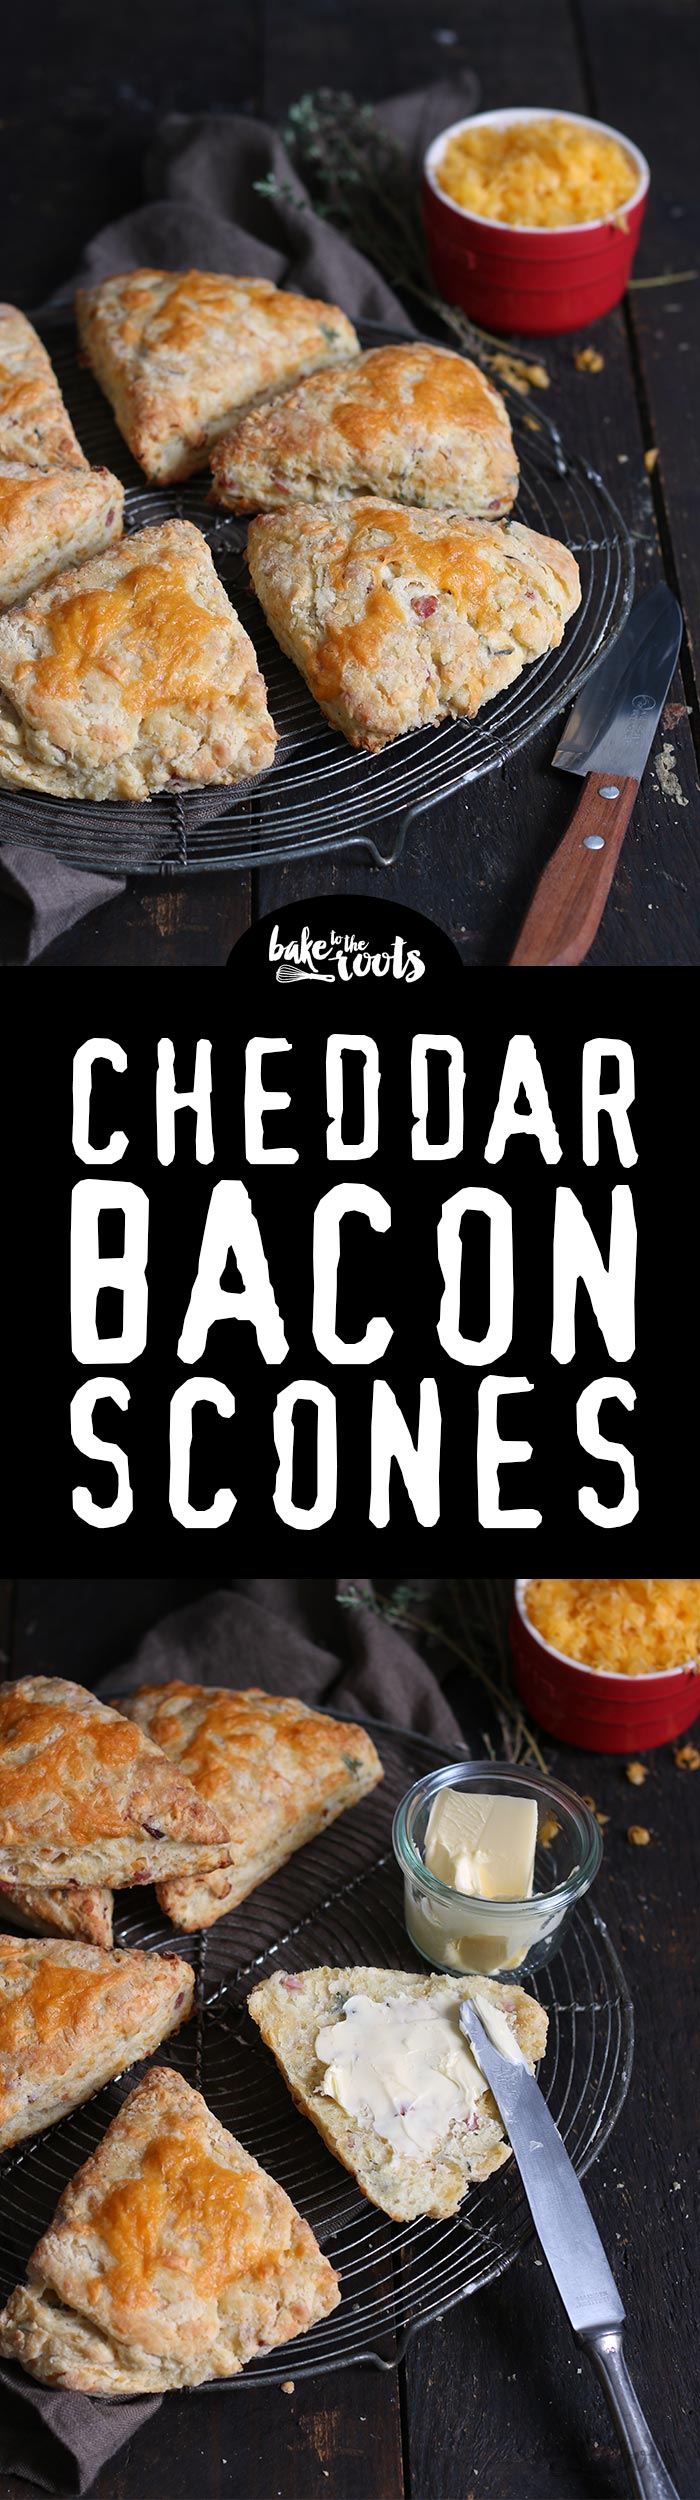 Leckere Scones mit Cheddar Käse und Bacon | Bake to the roots